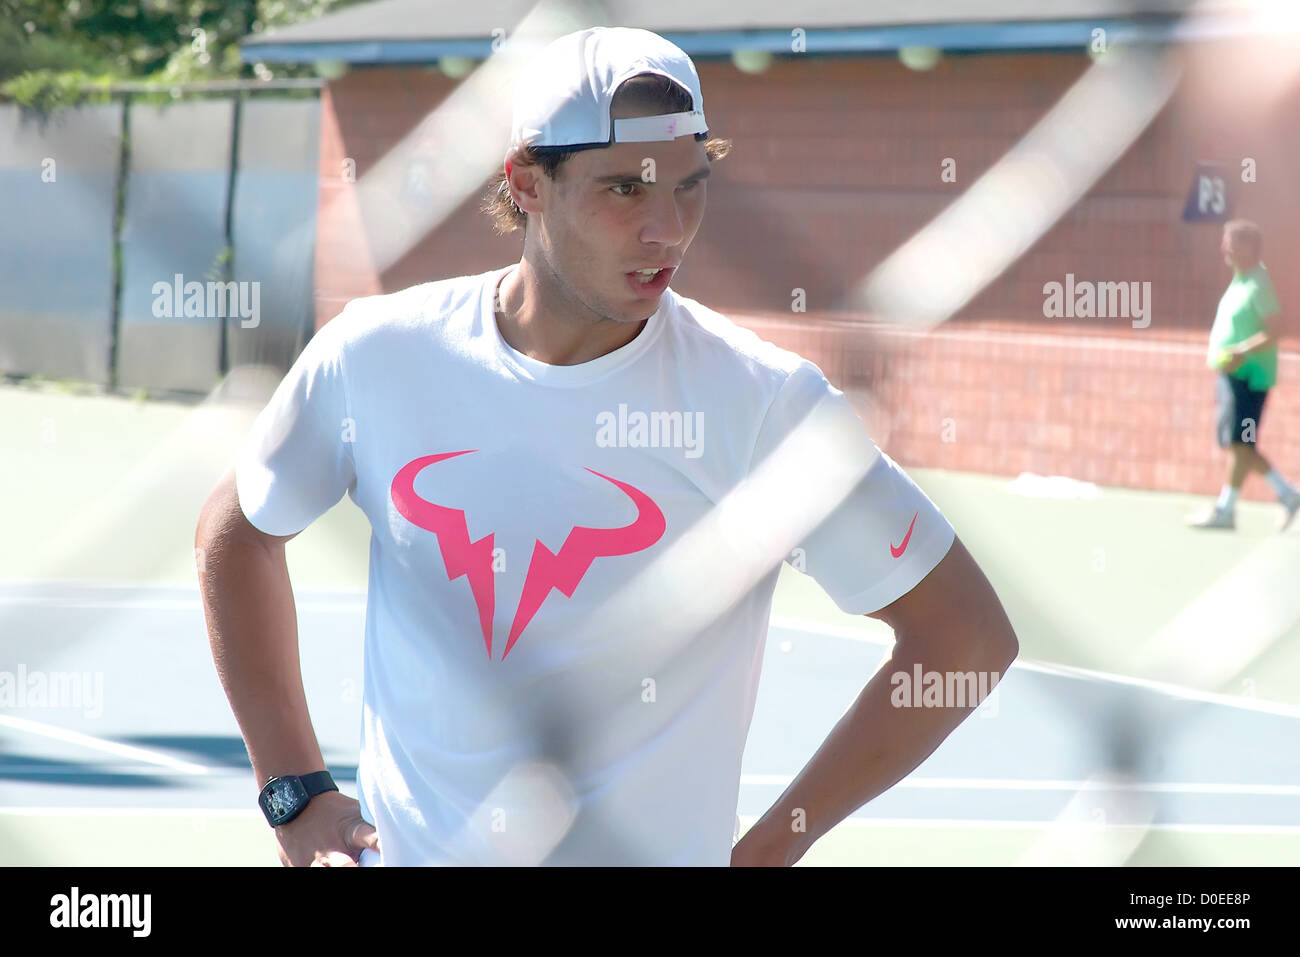 Rafael Nadal nahm die Praxis Gerichte heute bei den US Open 2010 in Flushing Meadows-Corona Park in New York City, USA- Stockfoto